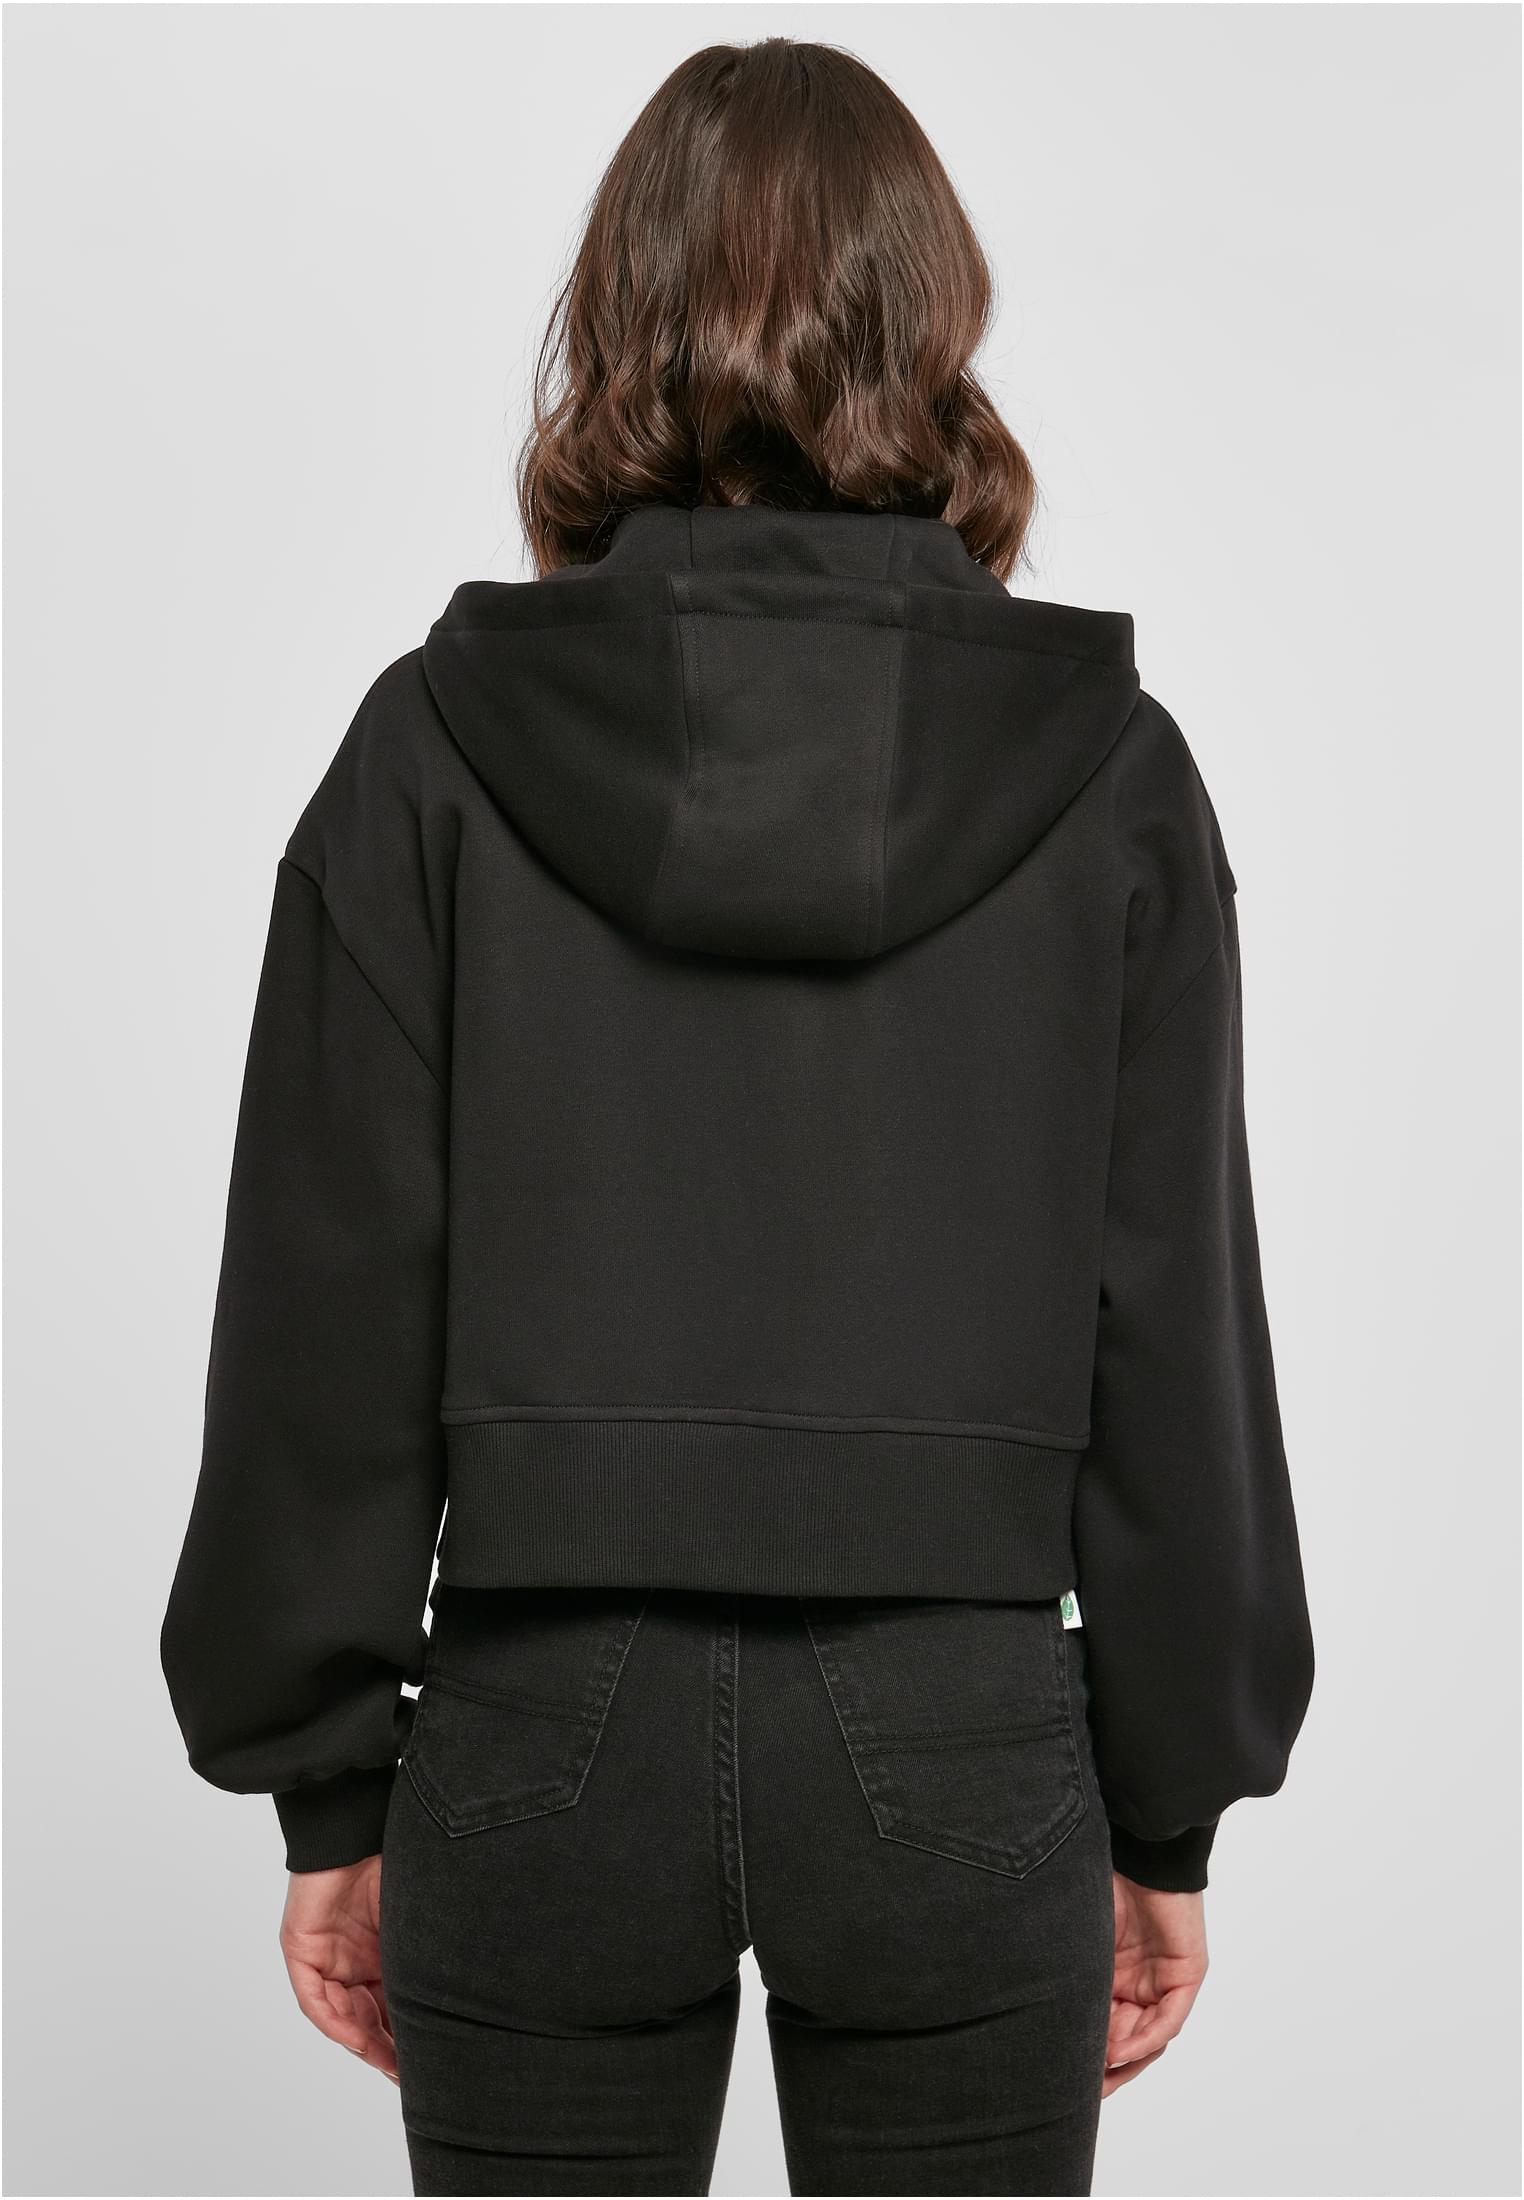 Ladies Short Oversized Zip Jacket-BY237